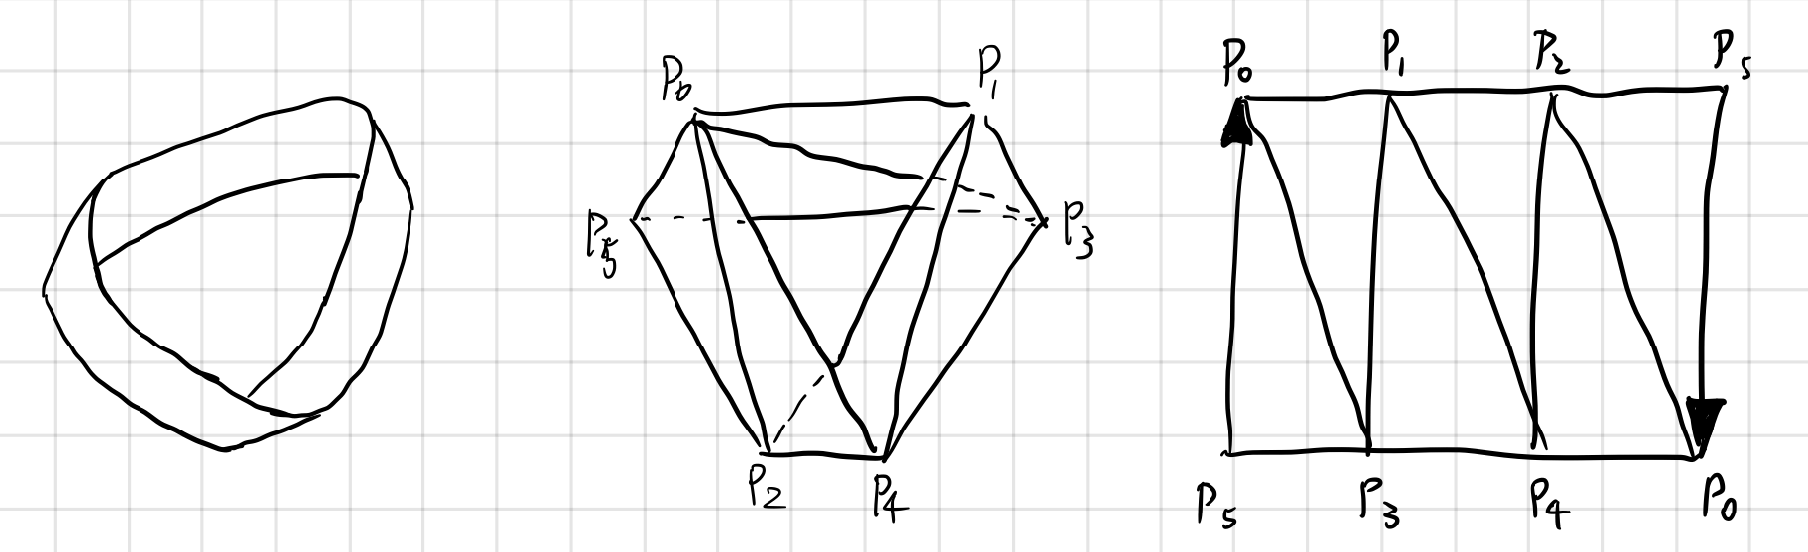 Triangulation of Mobius Band